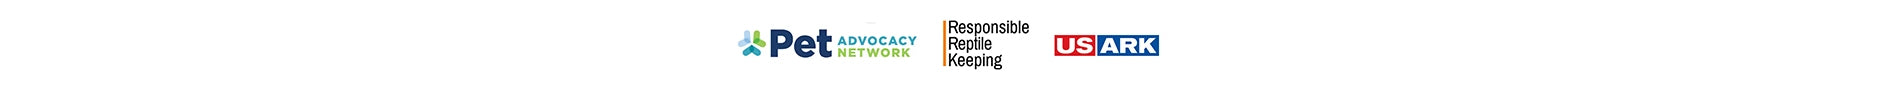 Custom Reptile Habitats supports the following associations